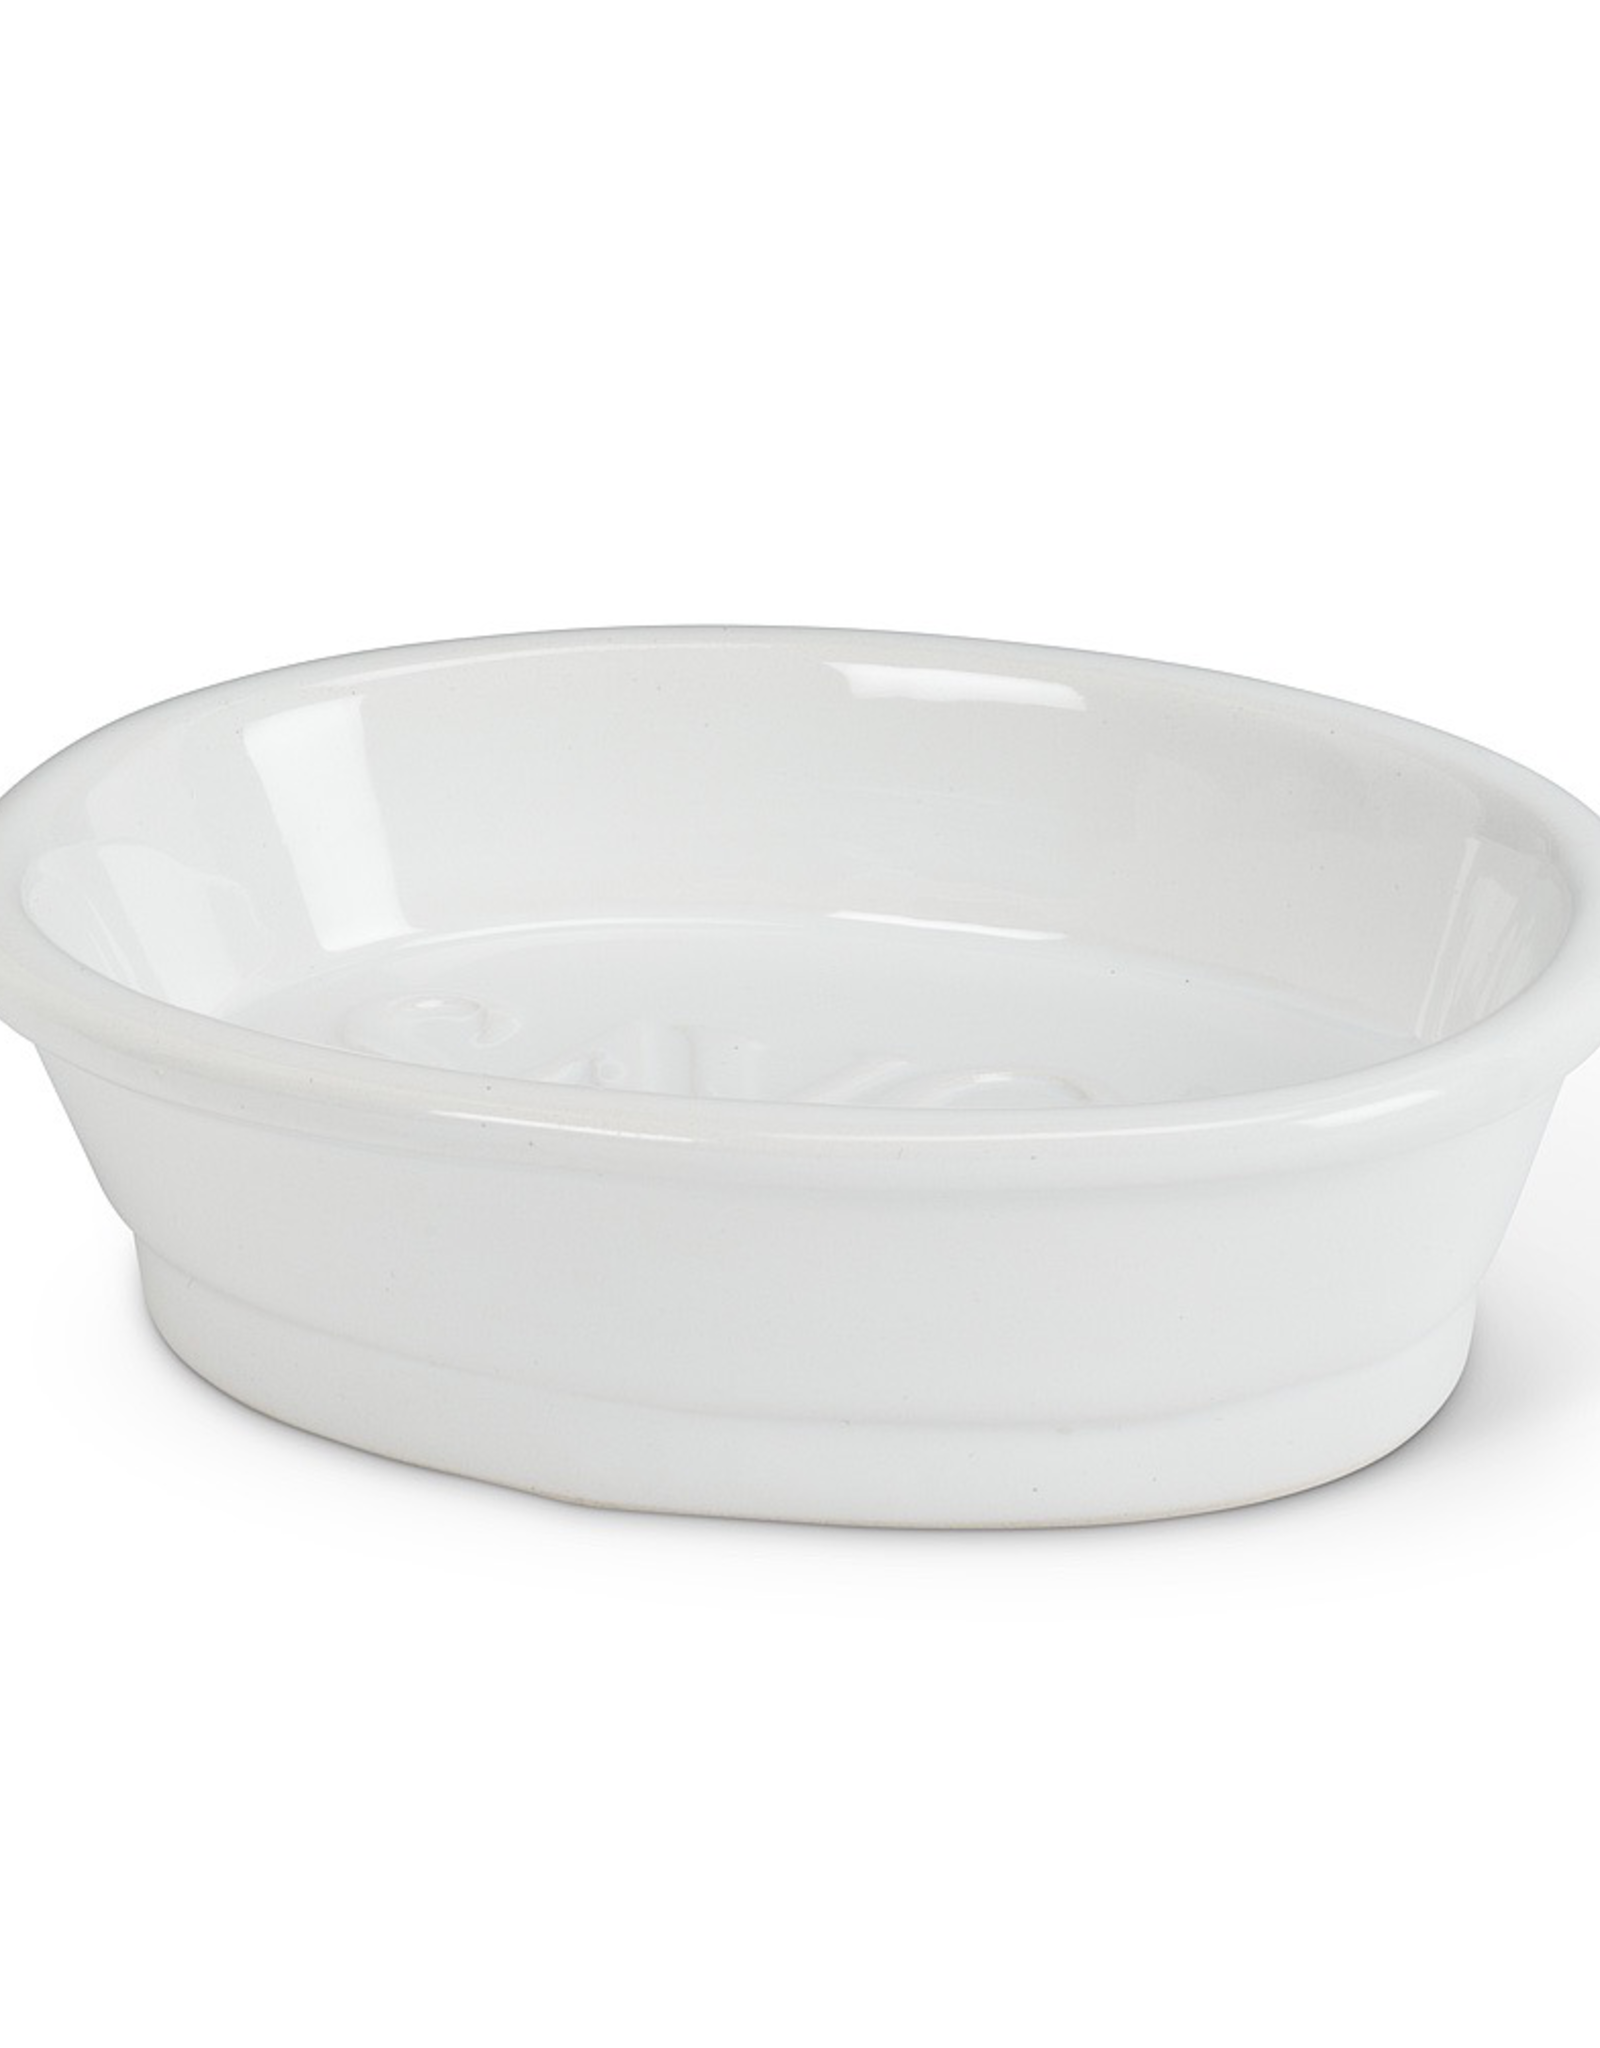 5" White Oval Ceramic "Savon" Dish